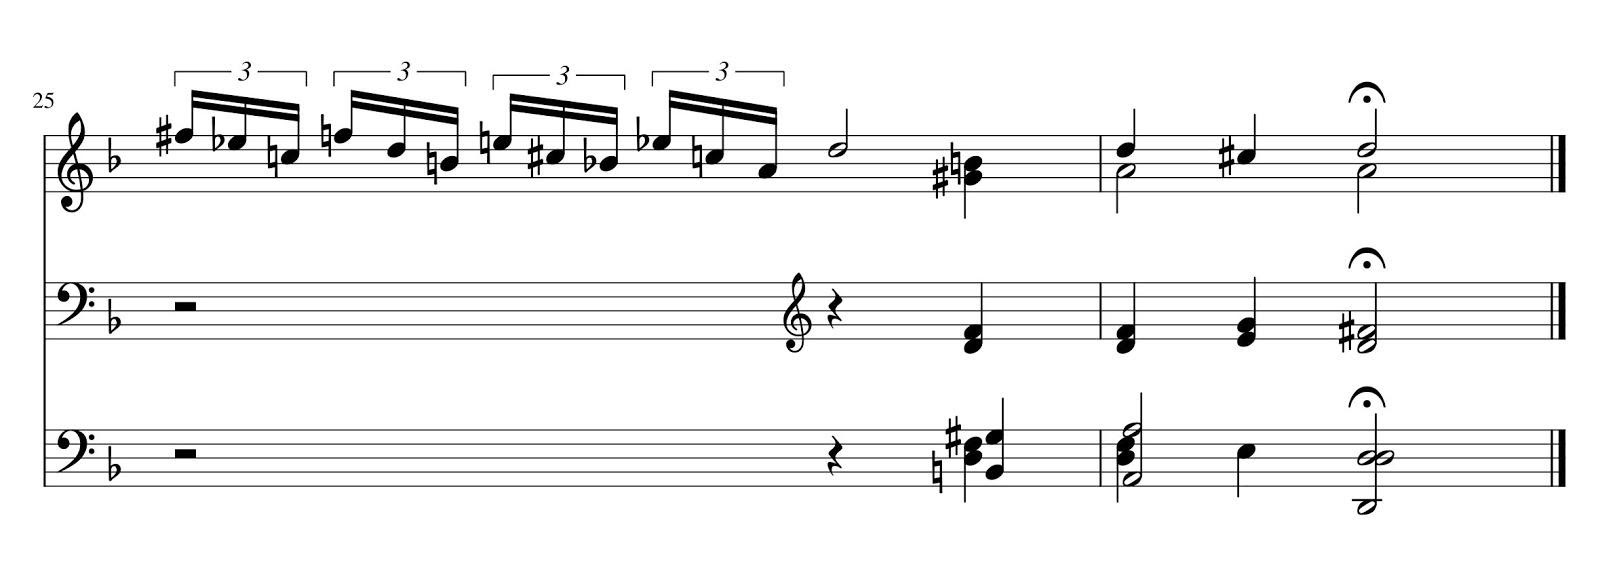 Lines of sheet music. More description below.